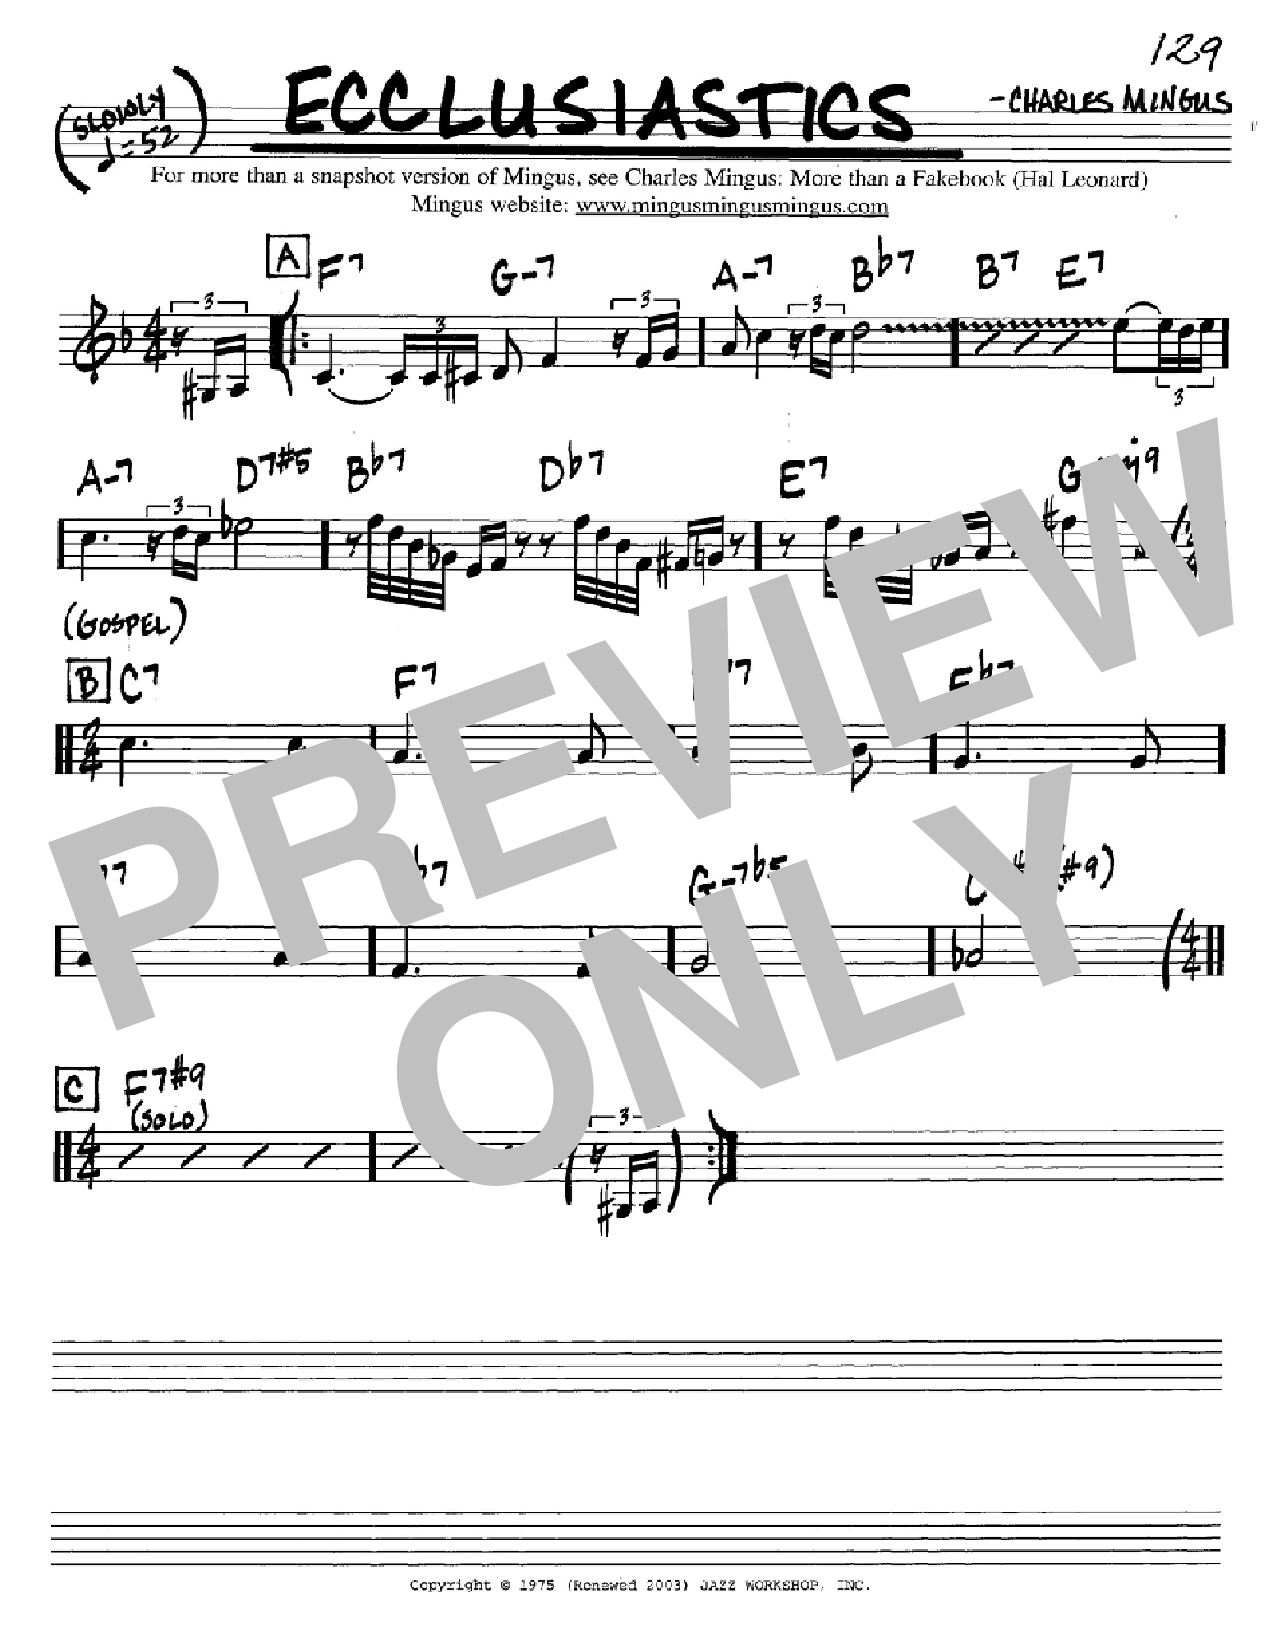 Download Charles Mingus Ecclusiastics Sheet Music